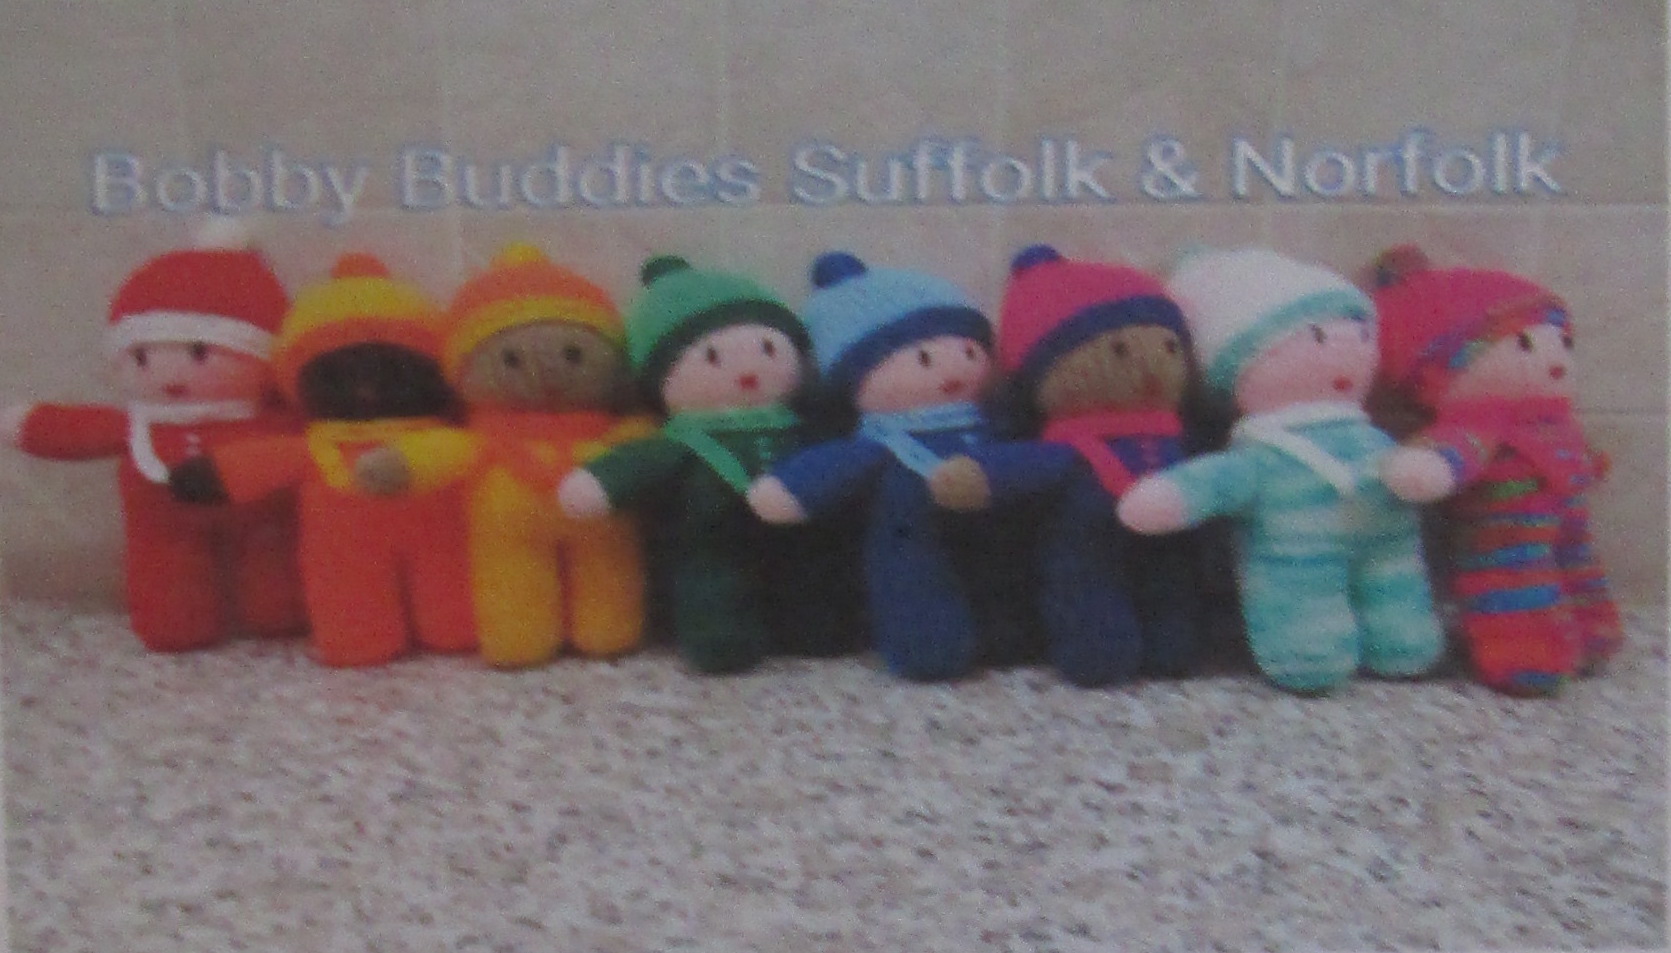 Join us knitting Bobby Buddies!